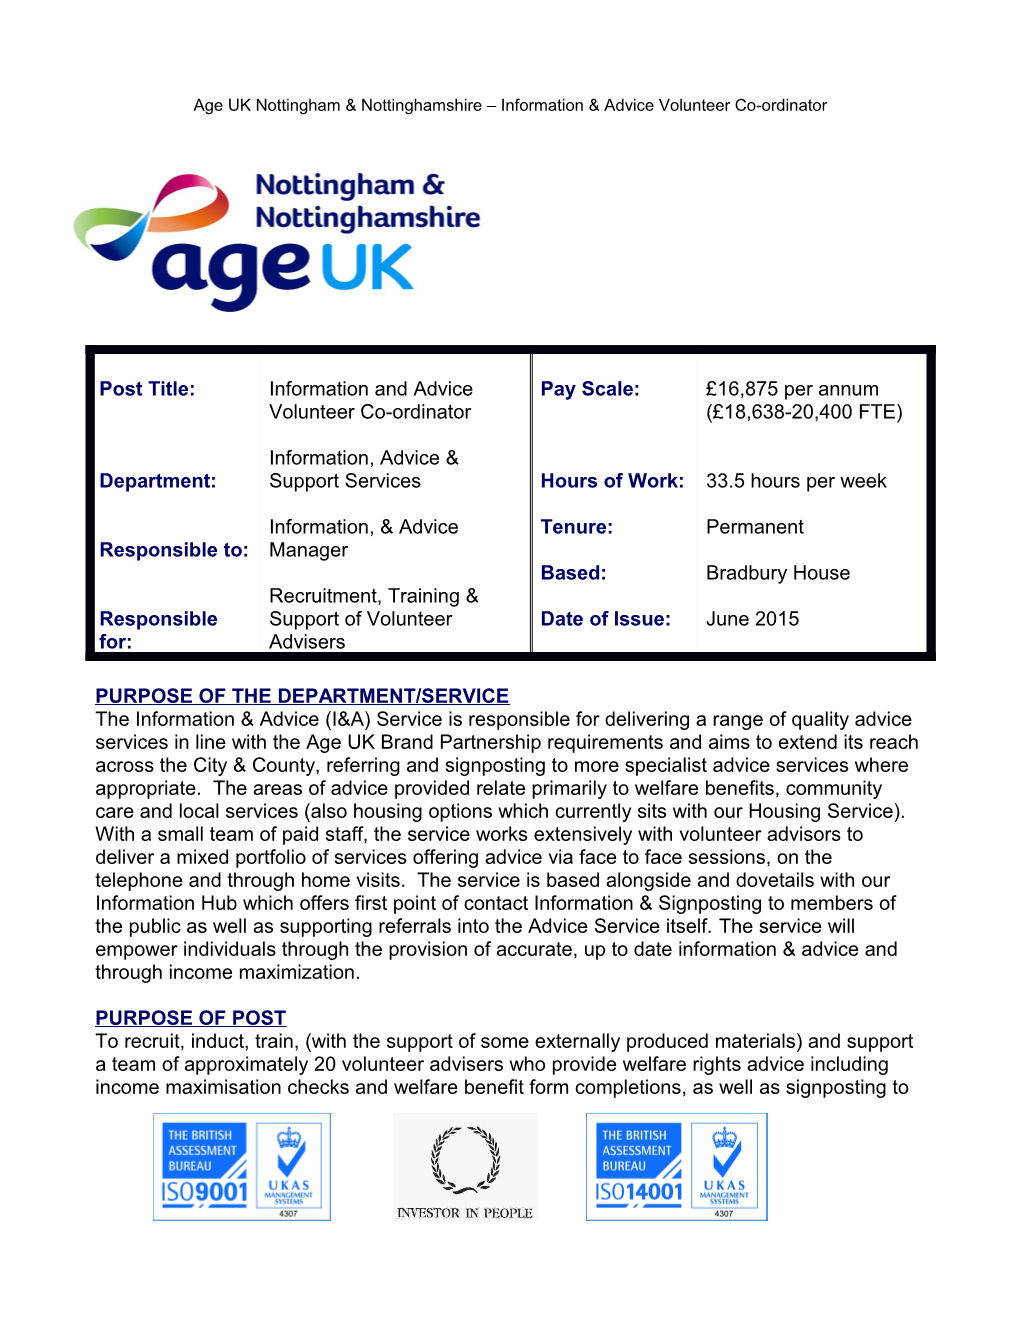 Age UK Nottingham & Nottinghamshire Information & Advice Volunteer Co-Ordinator